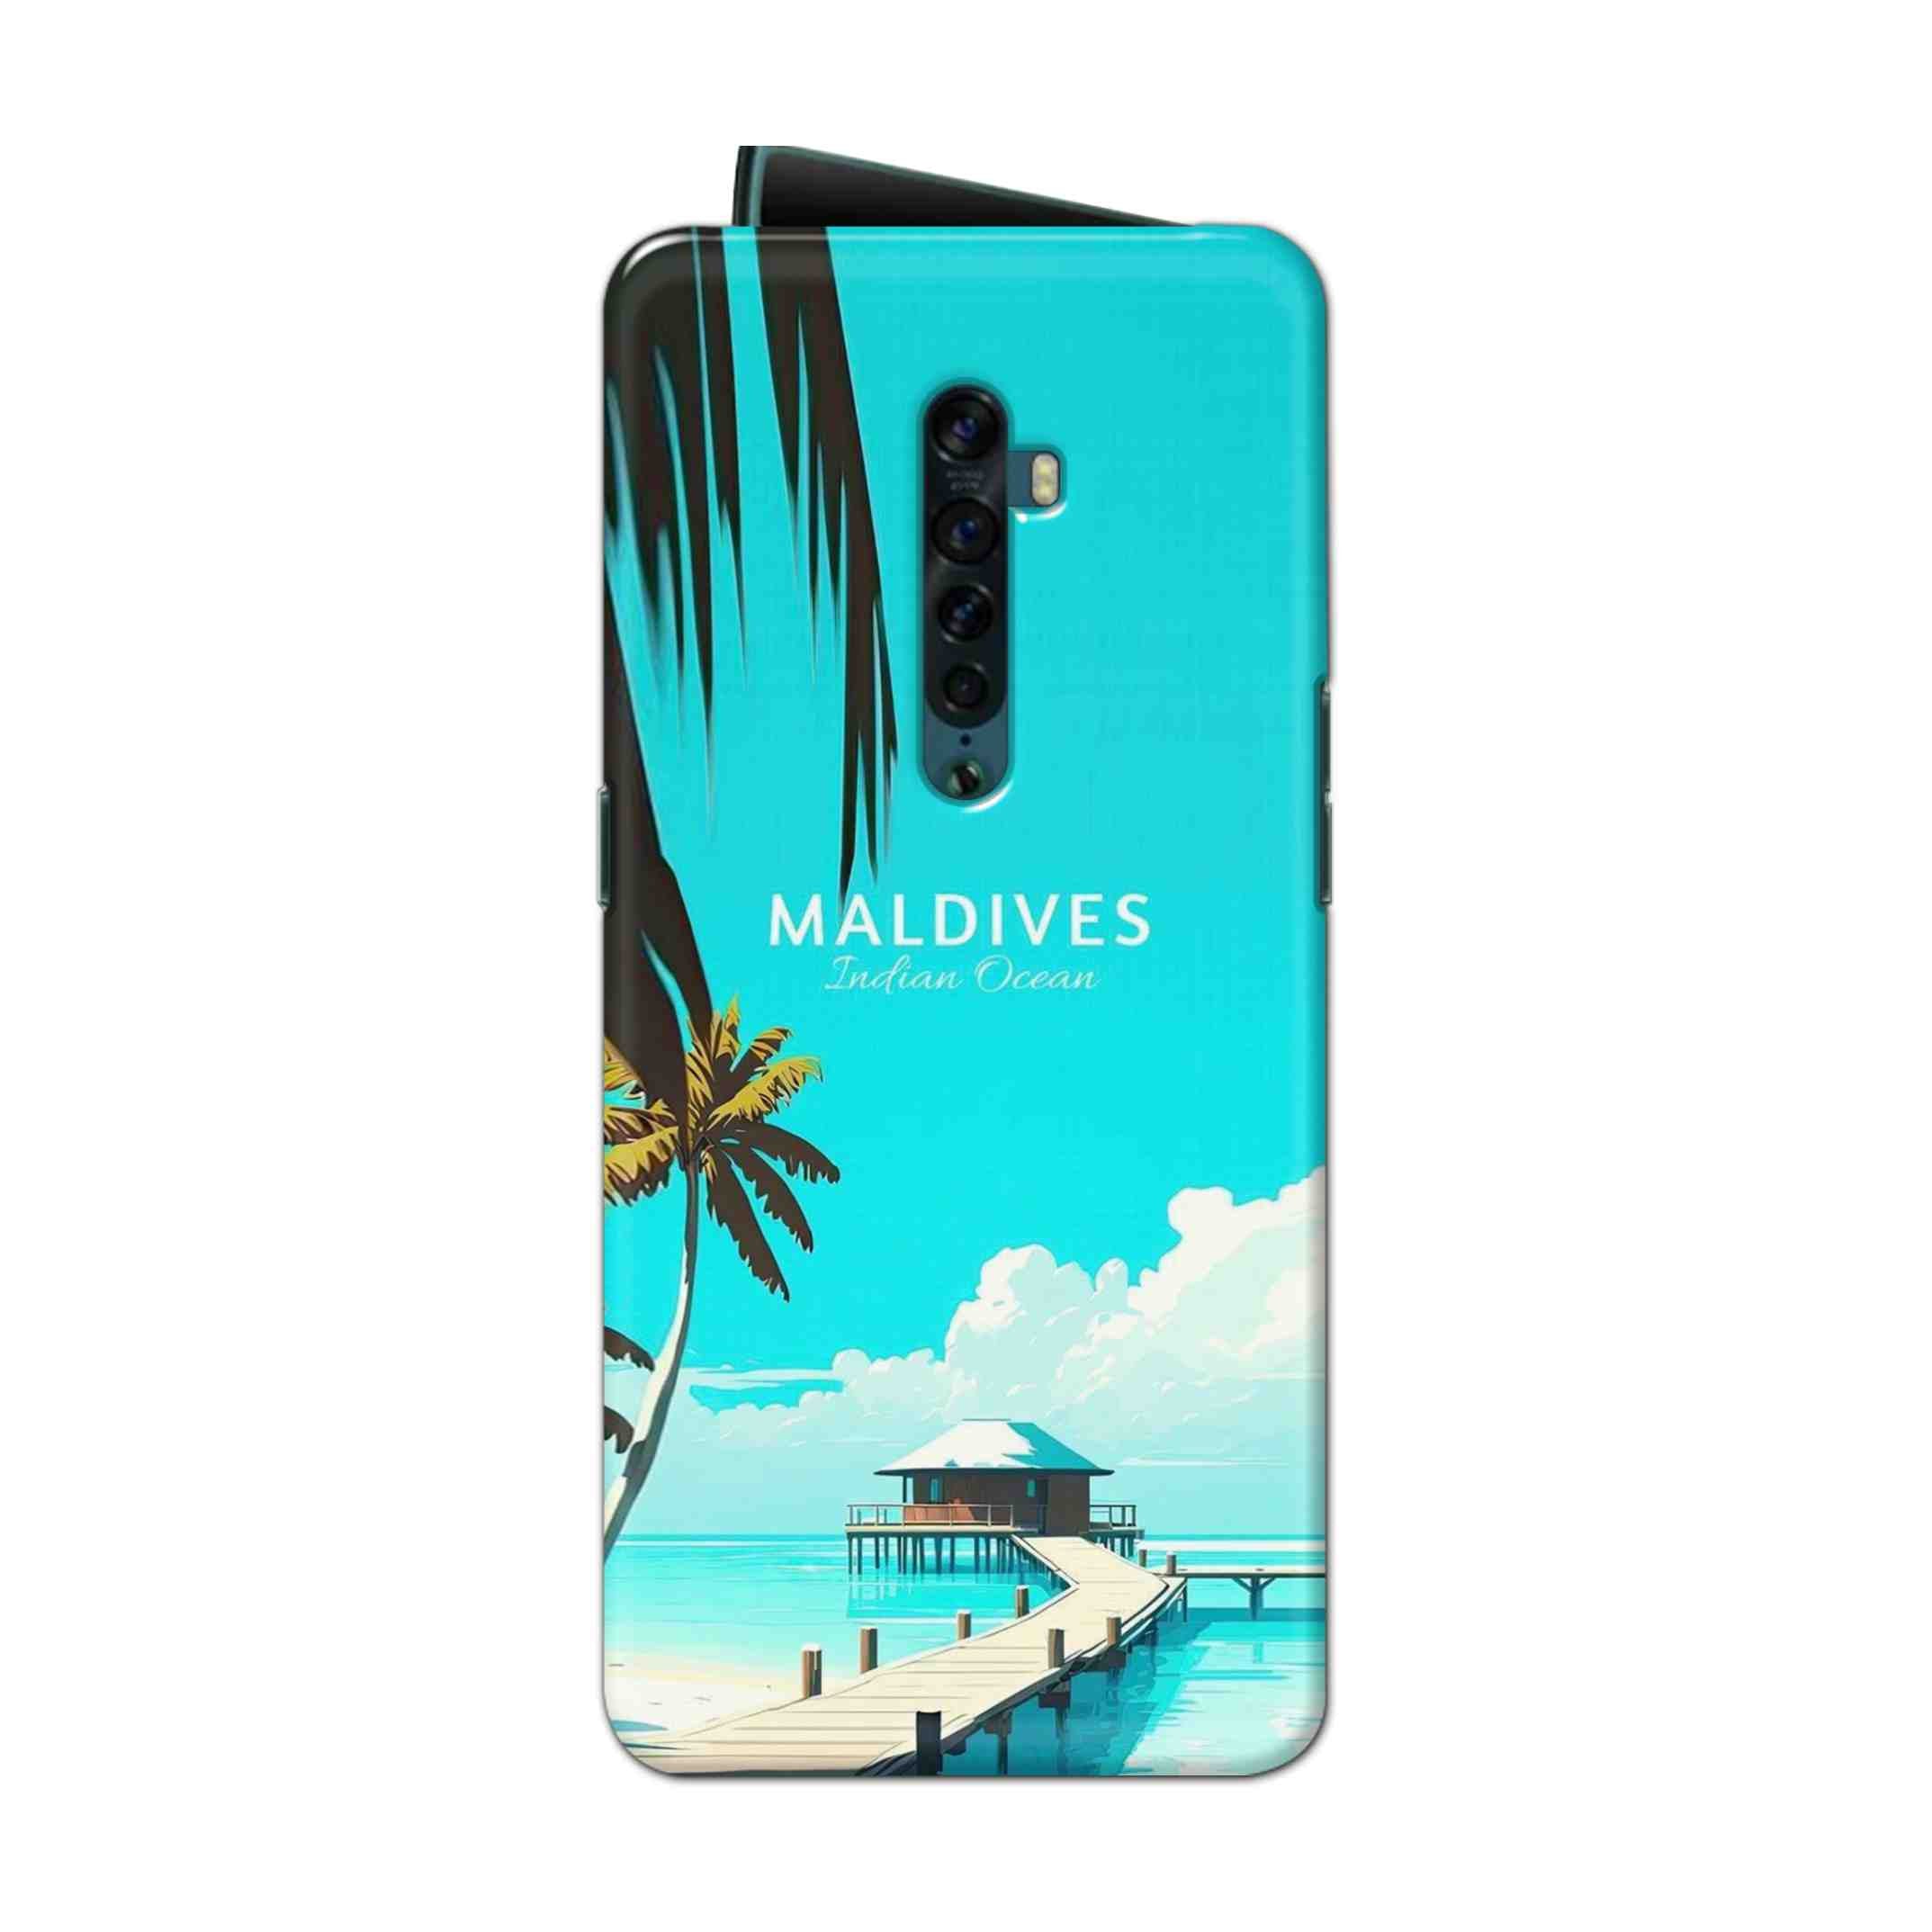 Buy Maldives Hard Back Mobile Phone Case Cover For Oppo Reno 2 Online